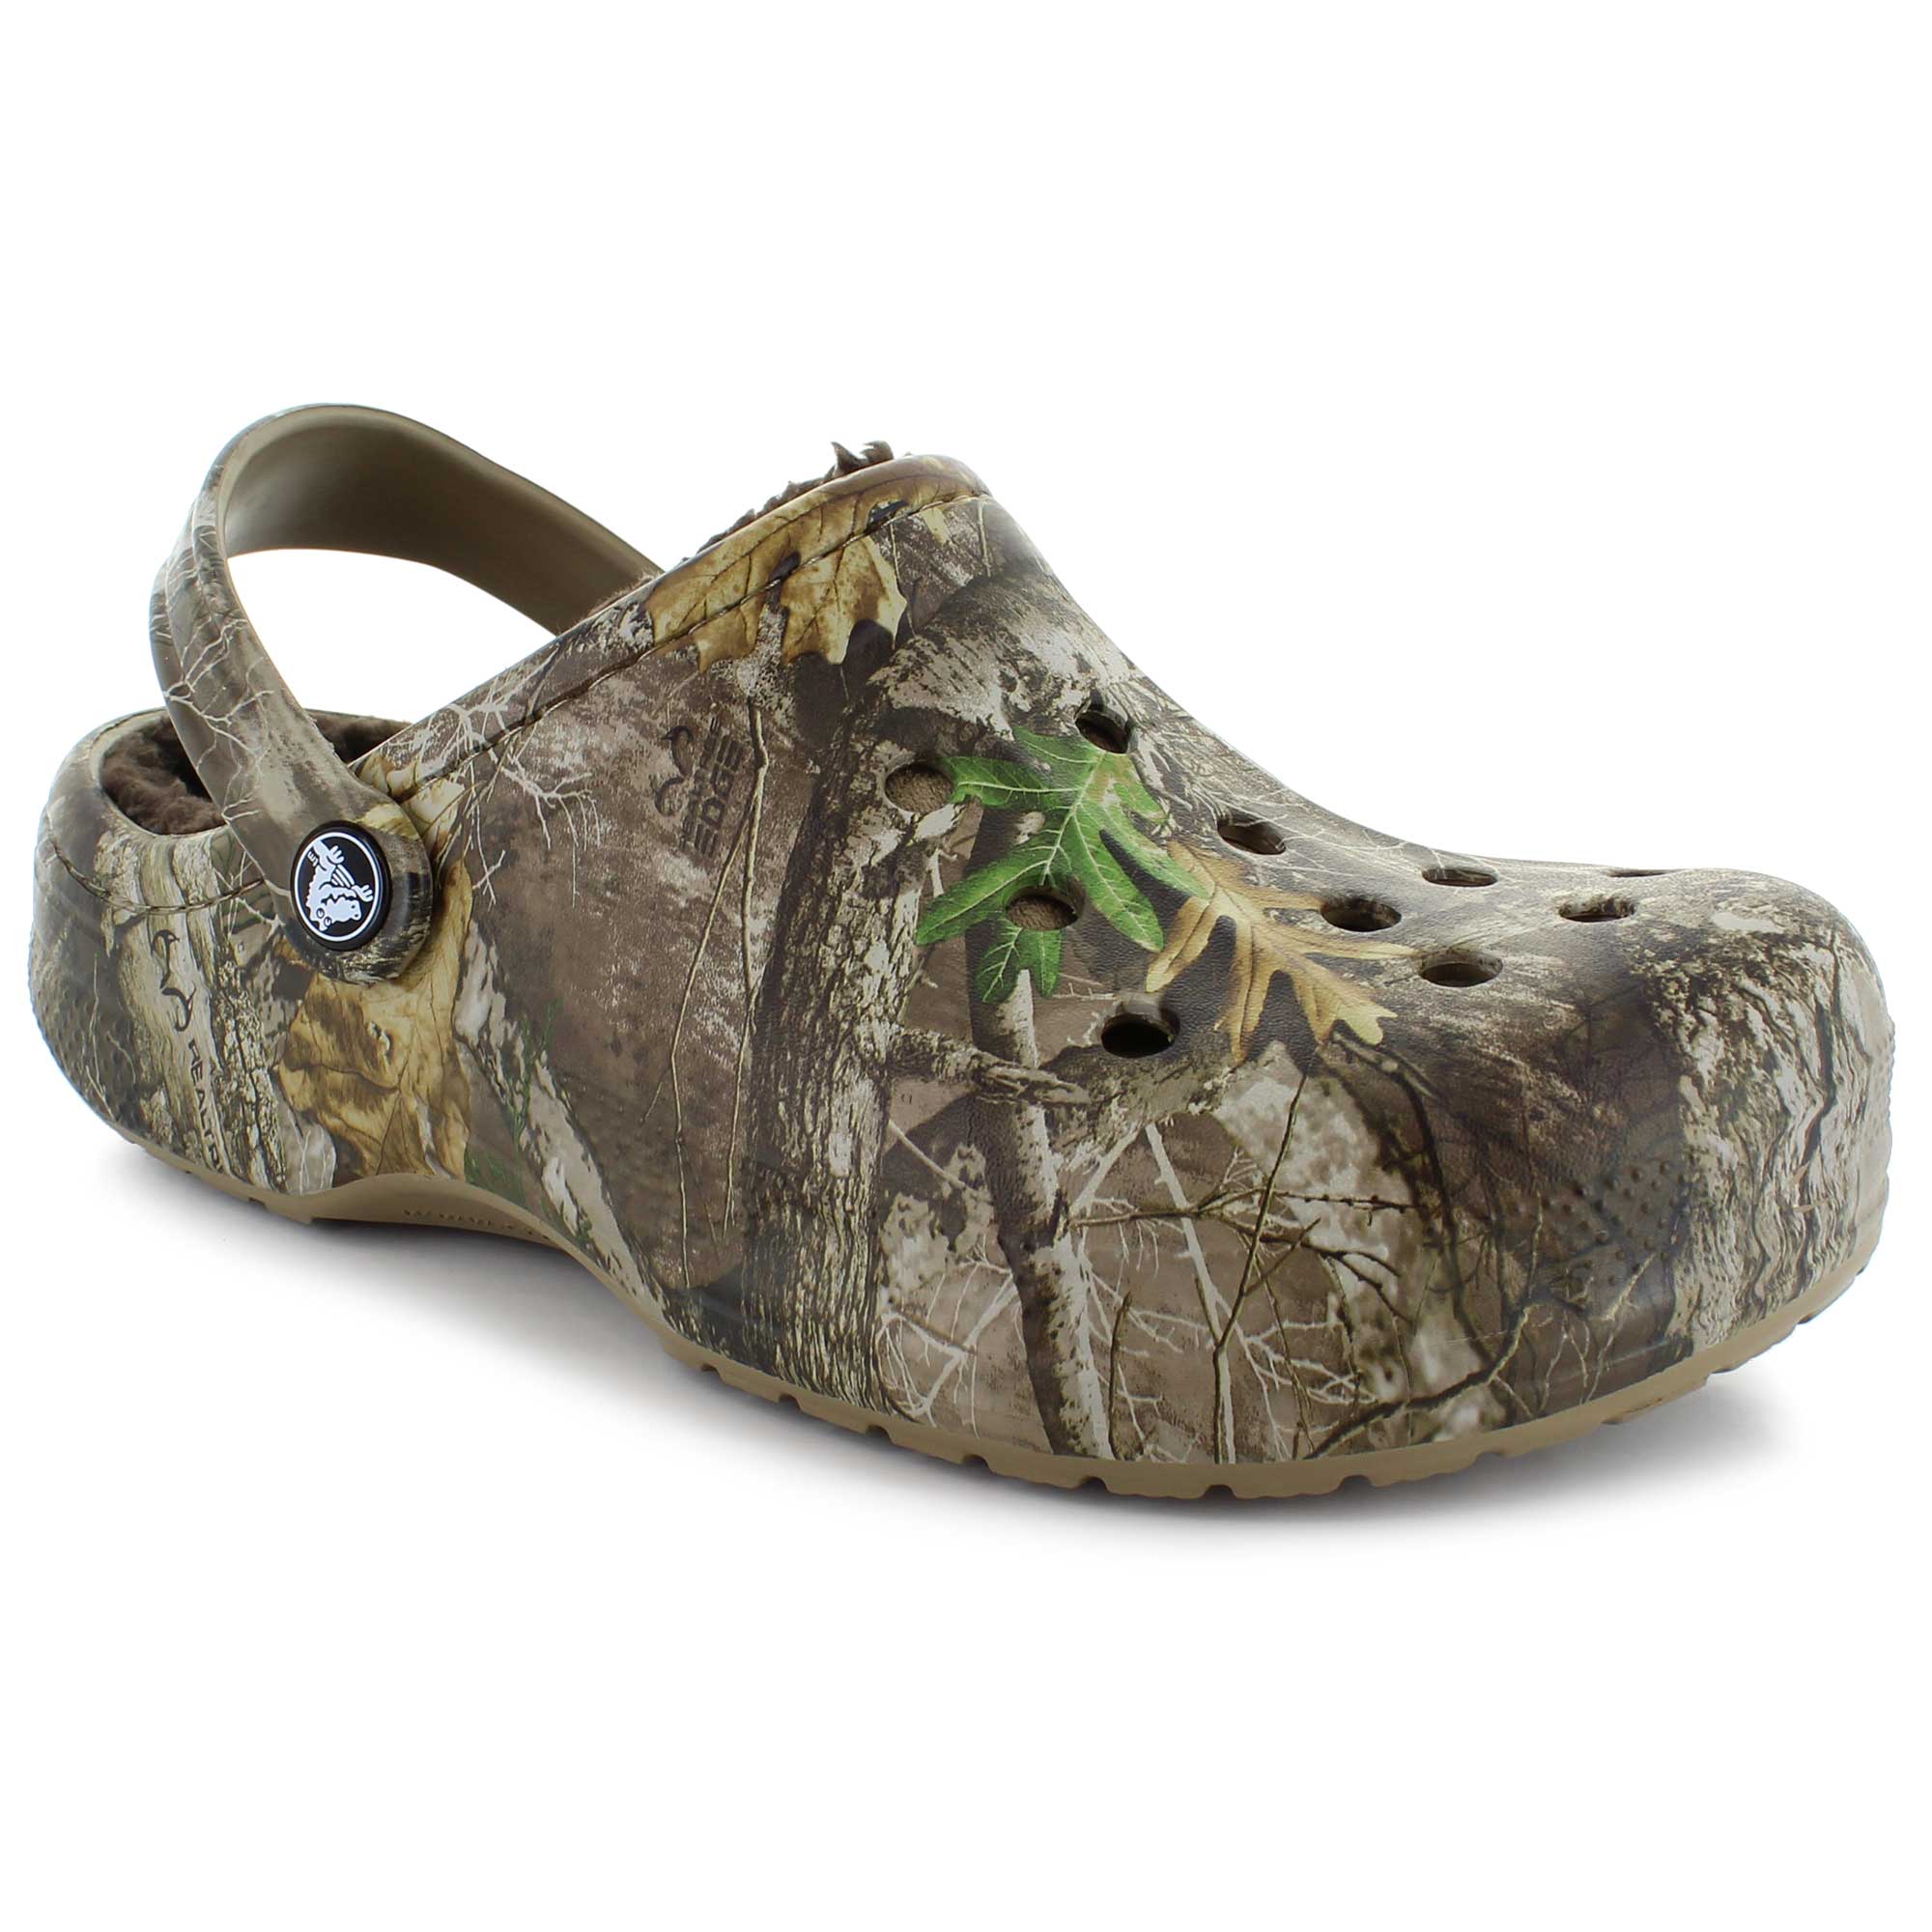 shoe show crocs